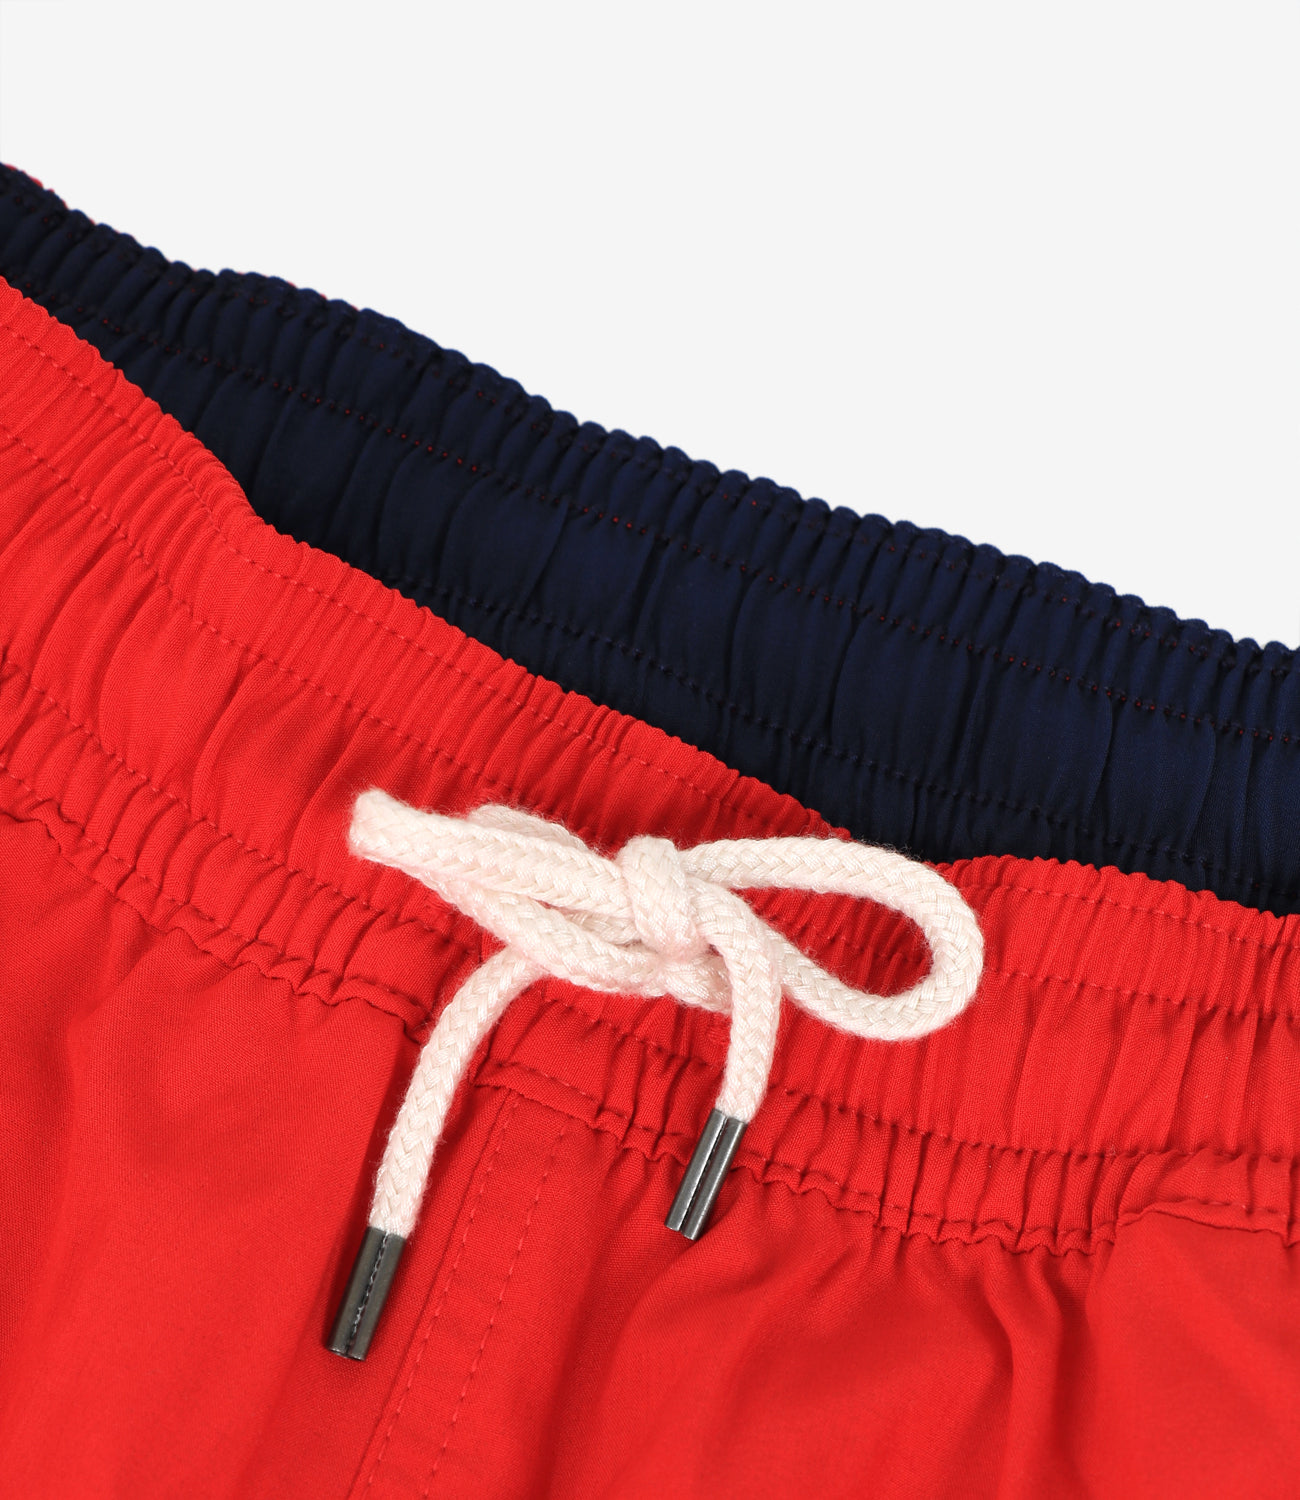 Polo Ralph Lauren | Swimsuit Boxer Red